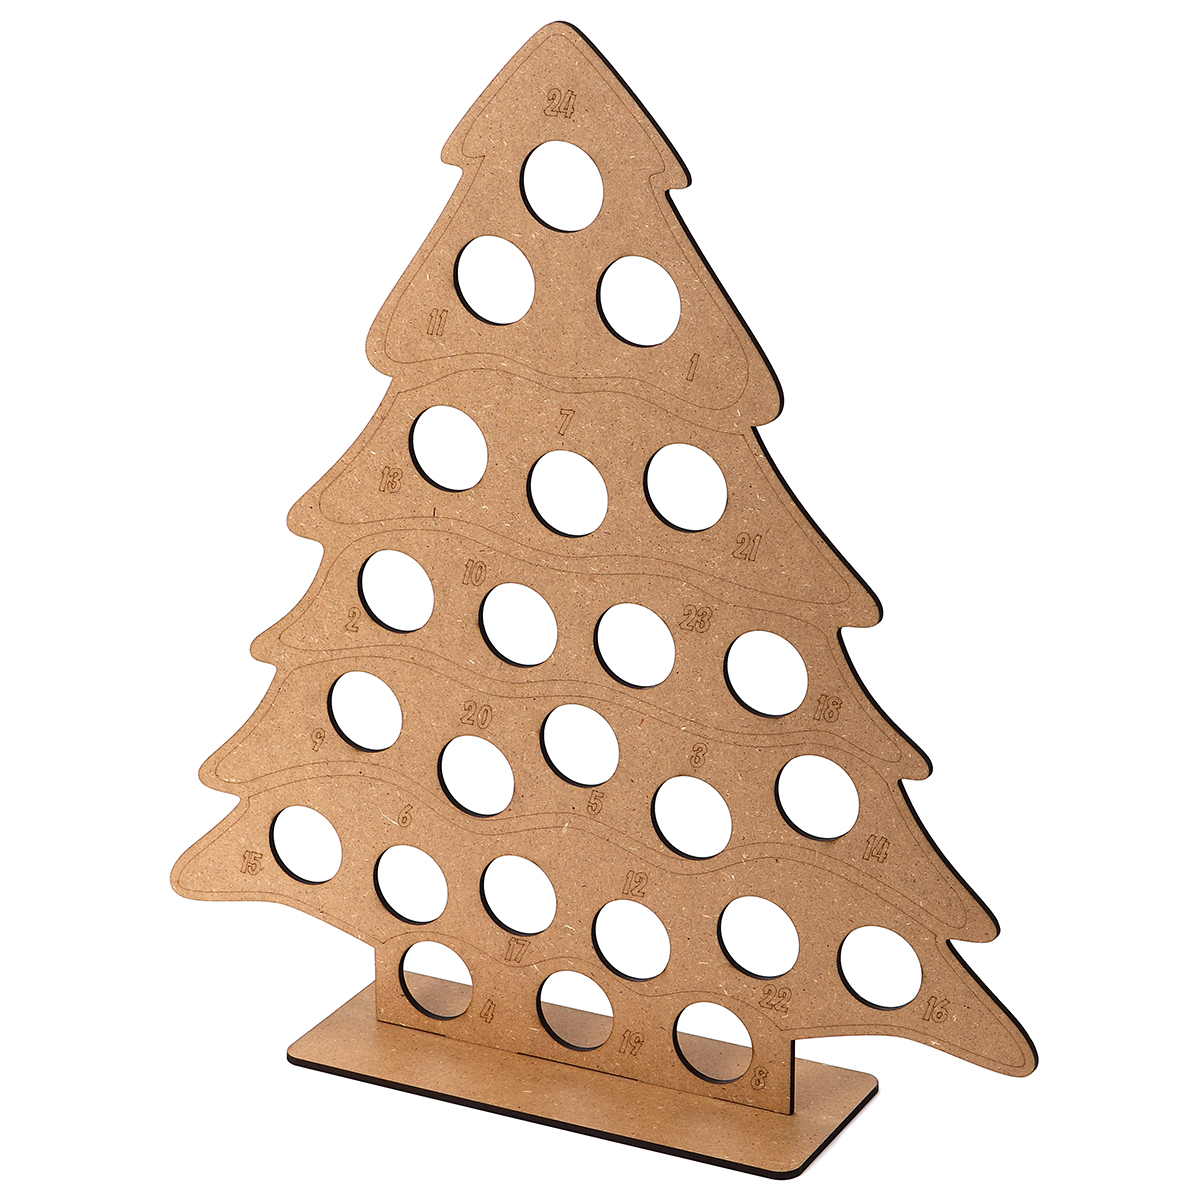 MDF-Wooden-Christmas-Advent-Calendar-Christmas-Tree-Decoration-Fits-24-Circular-Chocolates-Candy-Sta-1587877-8